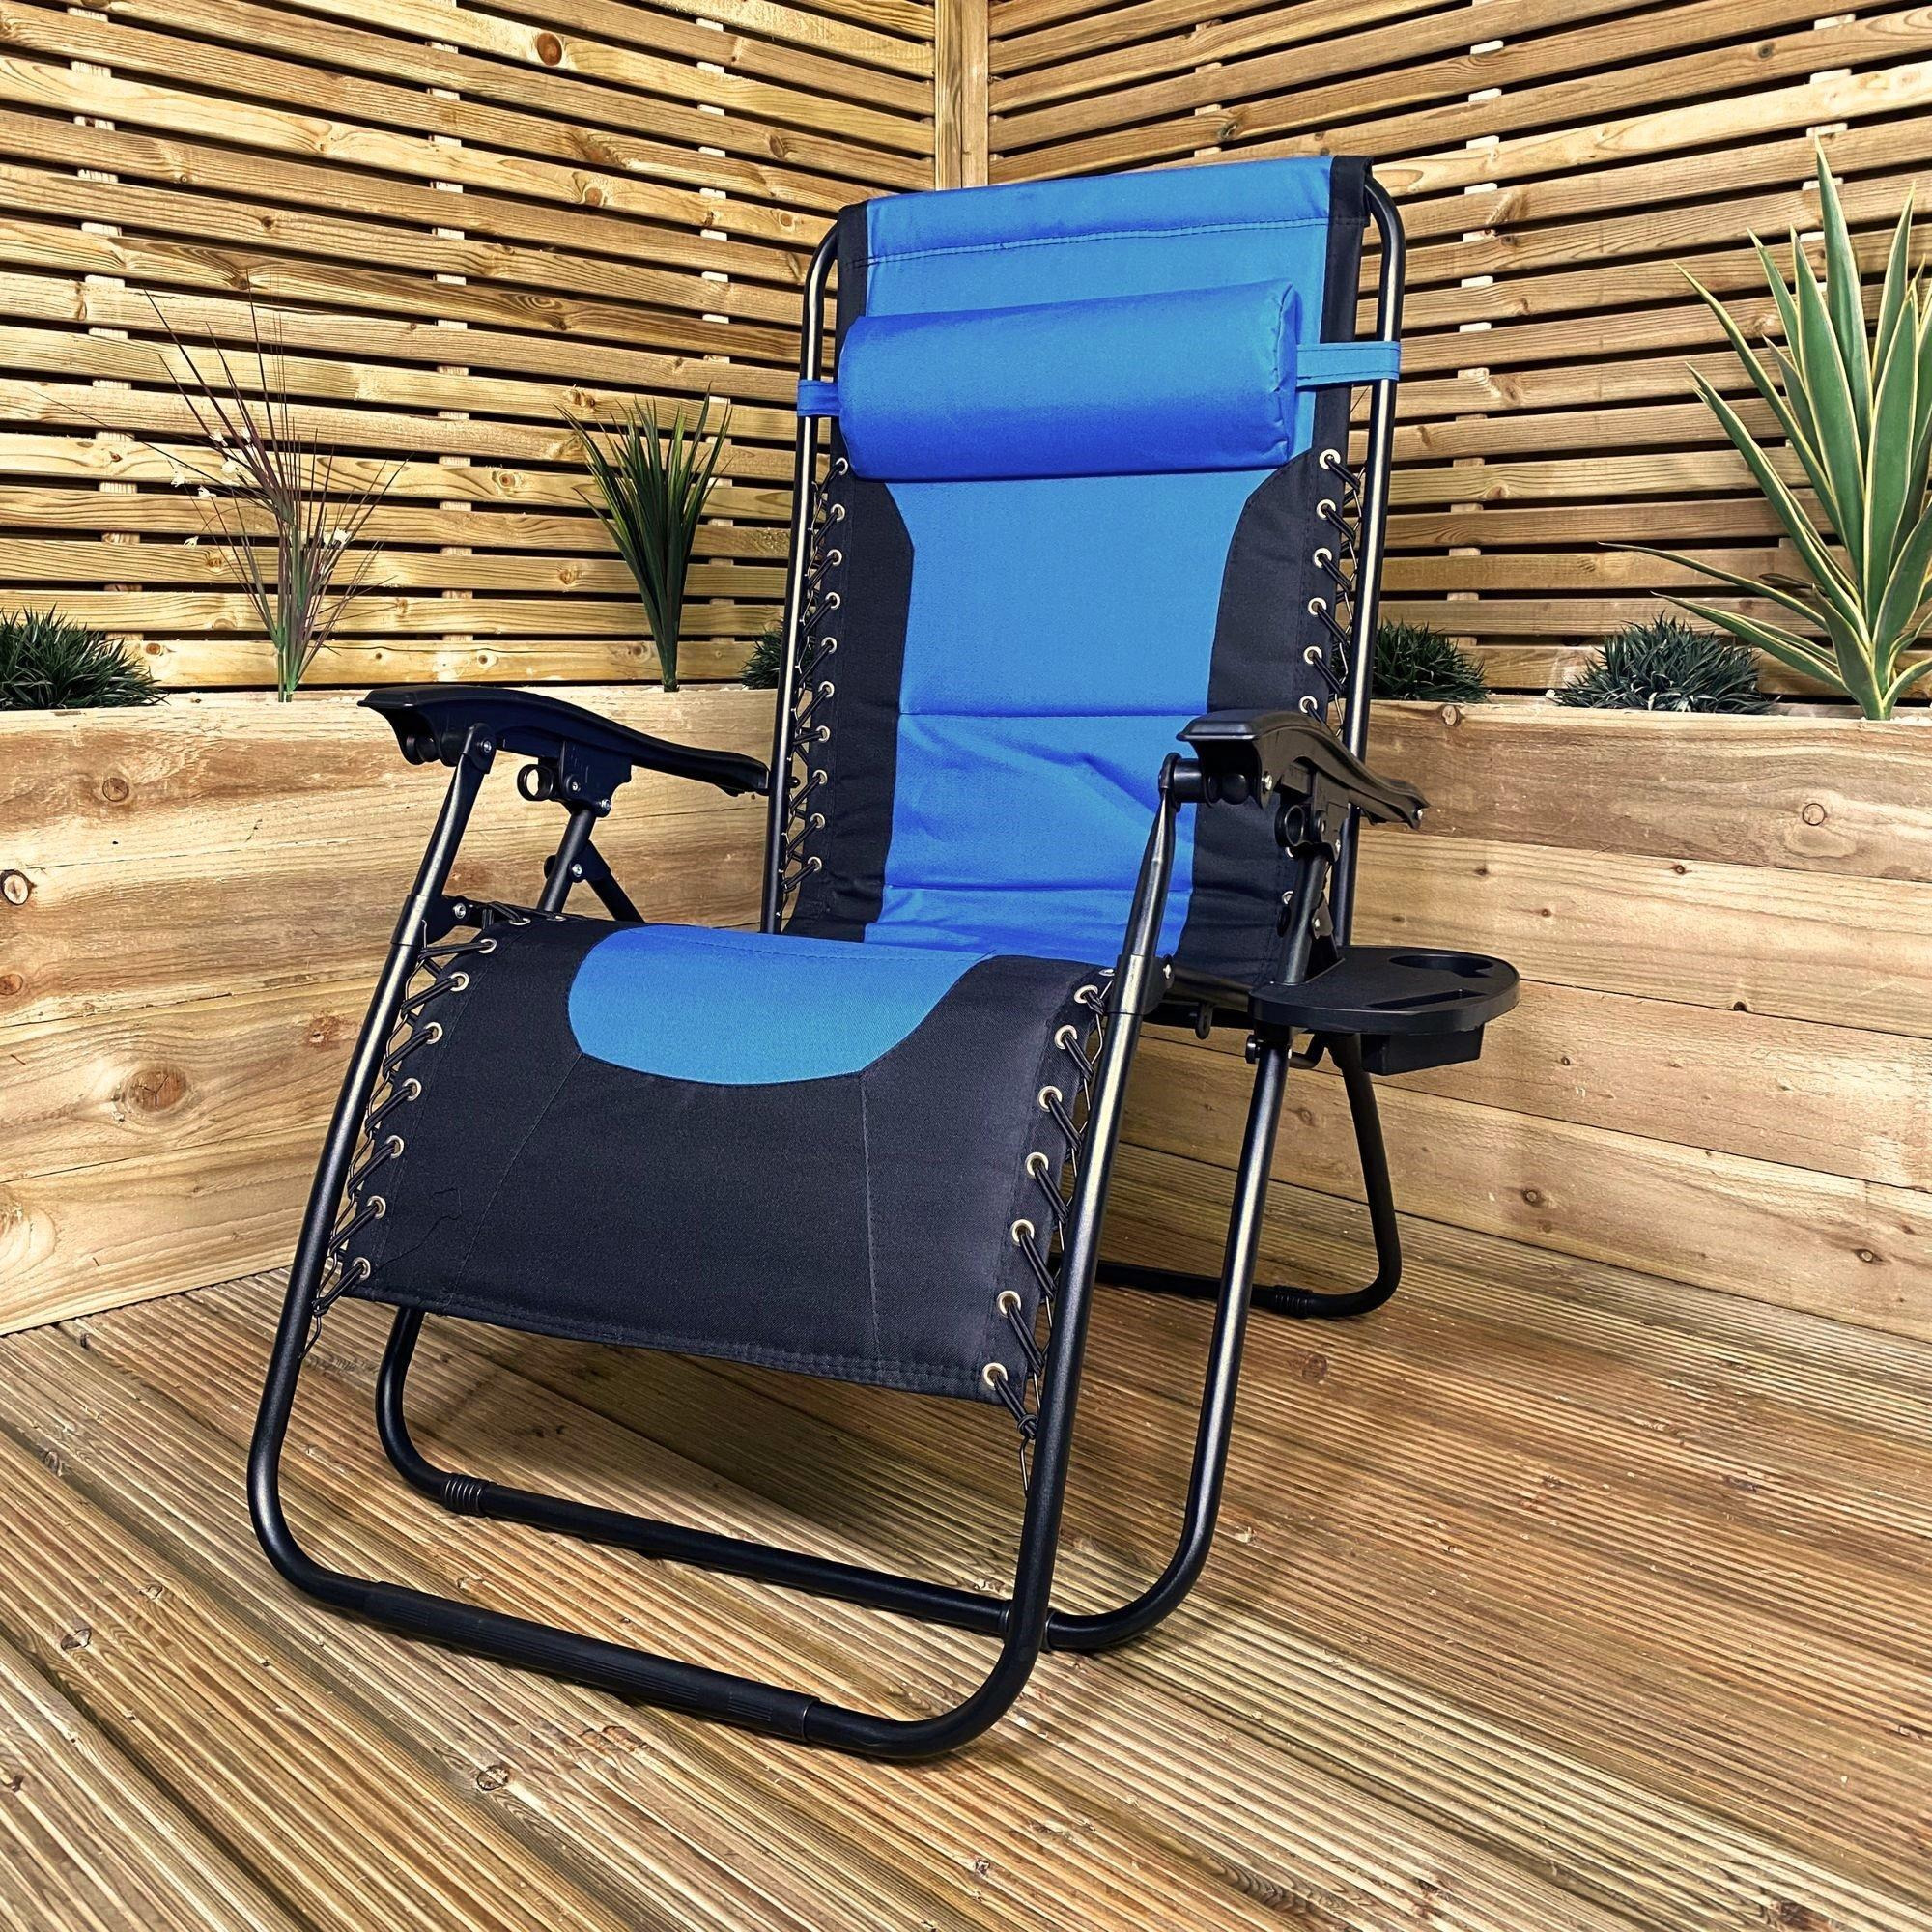 Luxury Padded Multi Position Zero Gravity Garden Relaxer Chair Lounger in Blue & Black - image 1